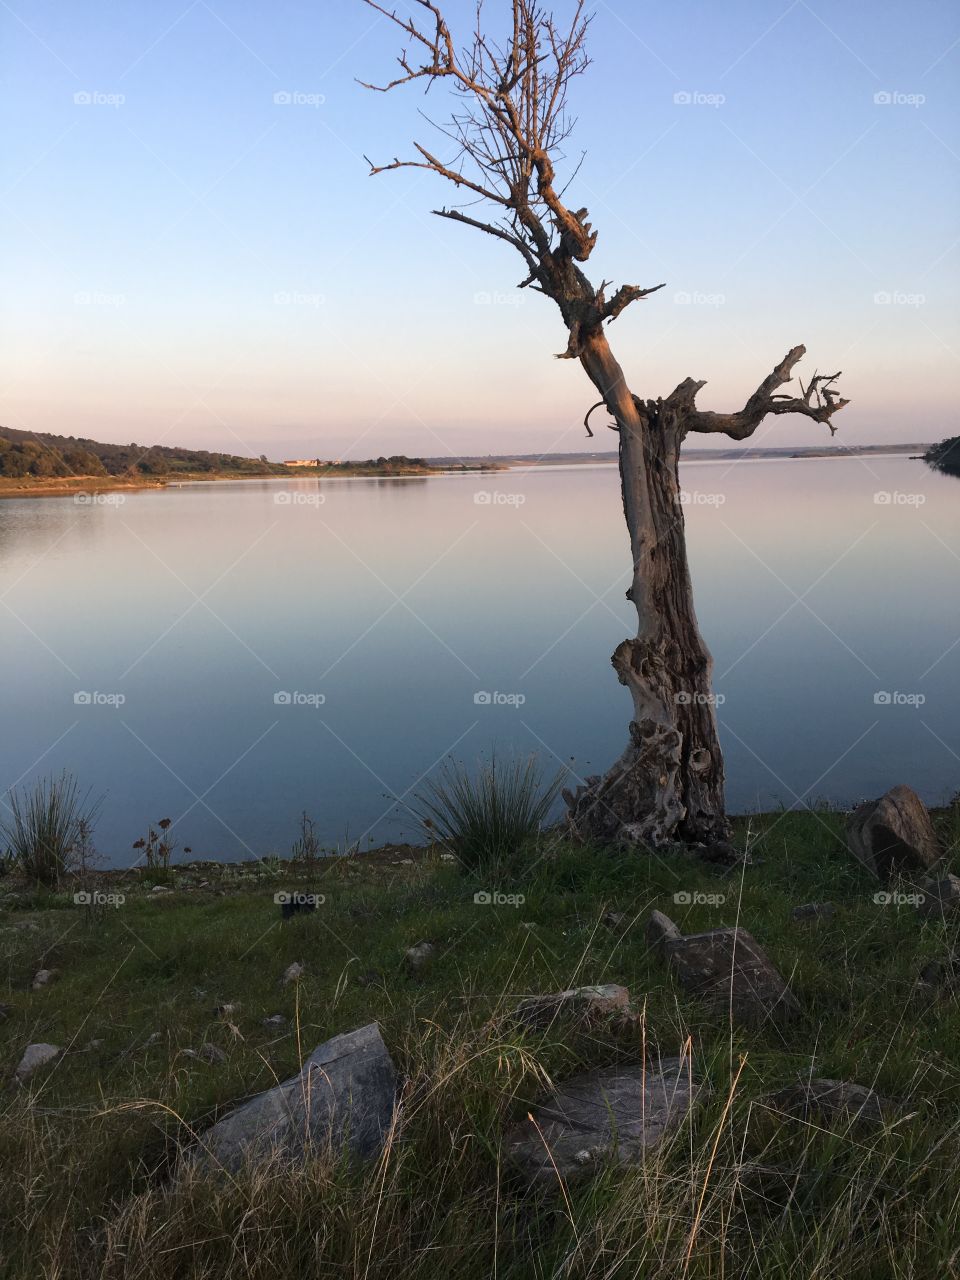 Lake Sunset and Weathered Tree